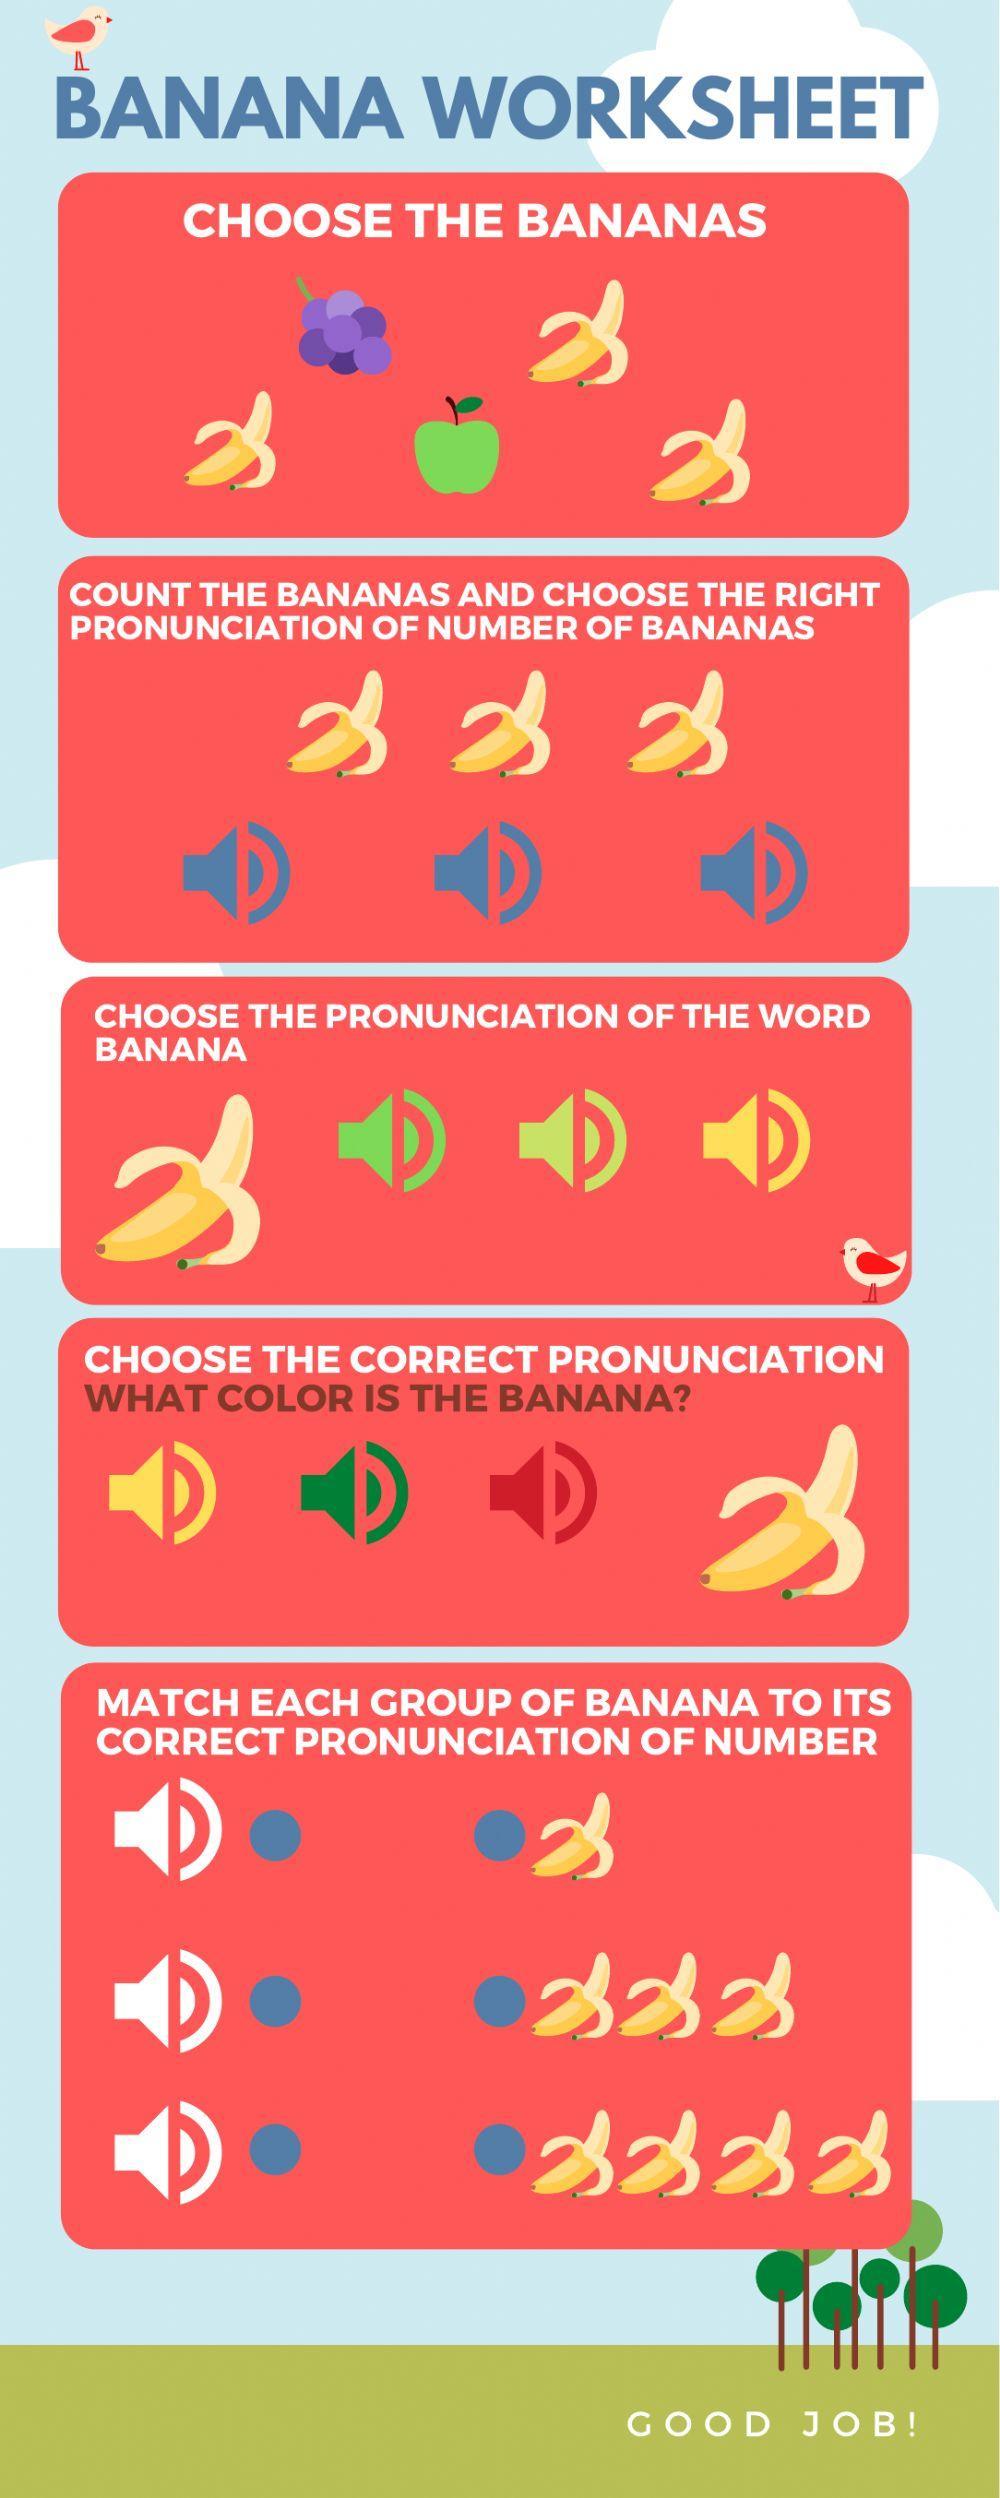 Banana Worksheet